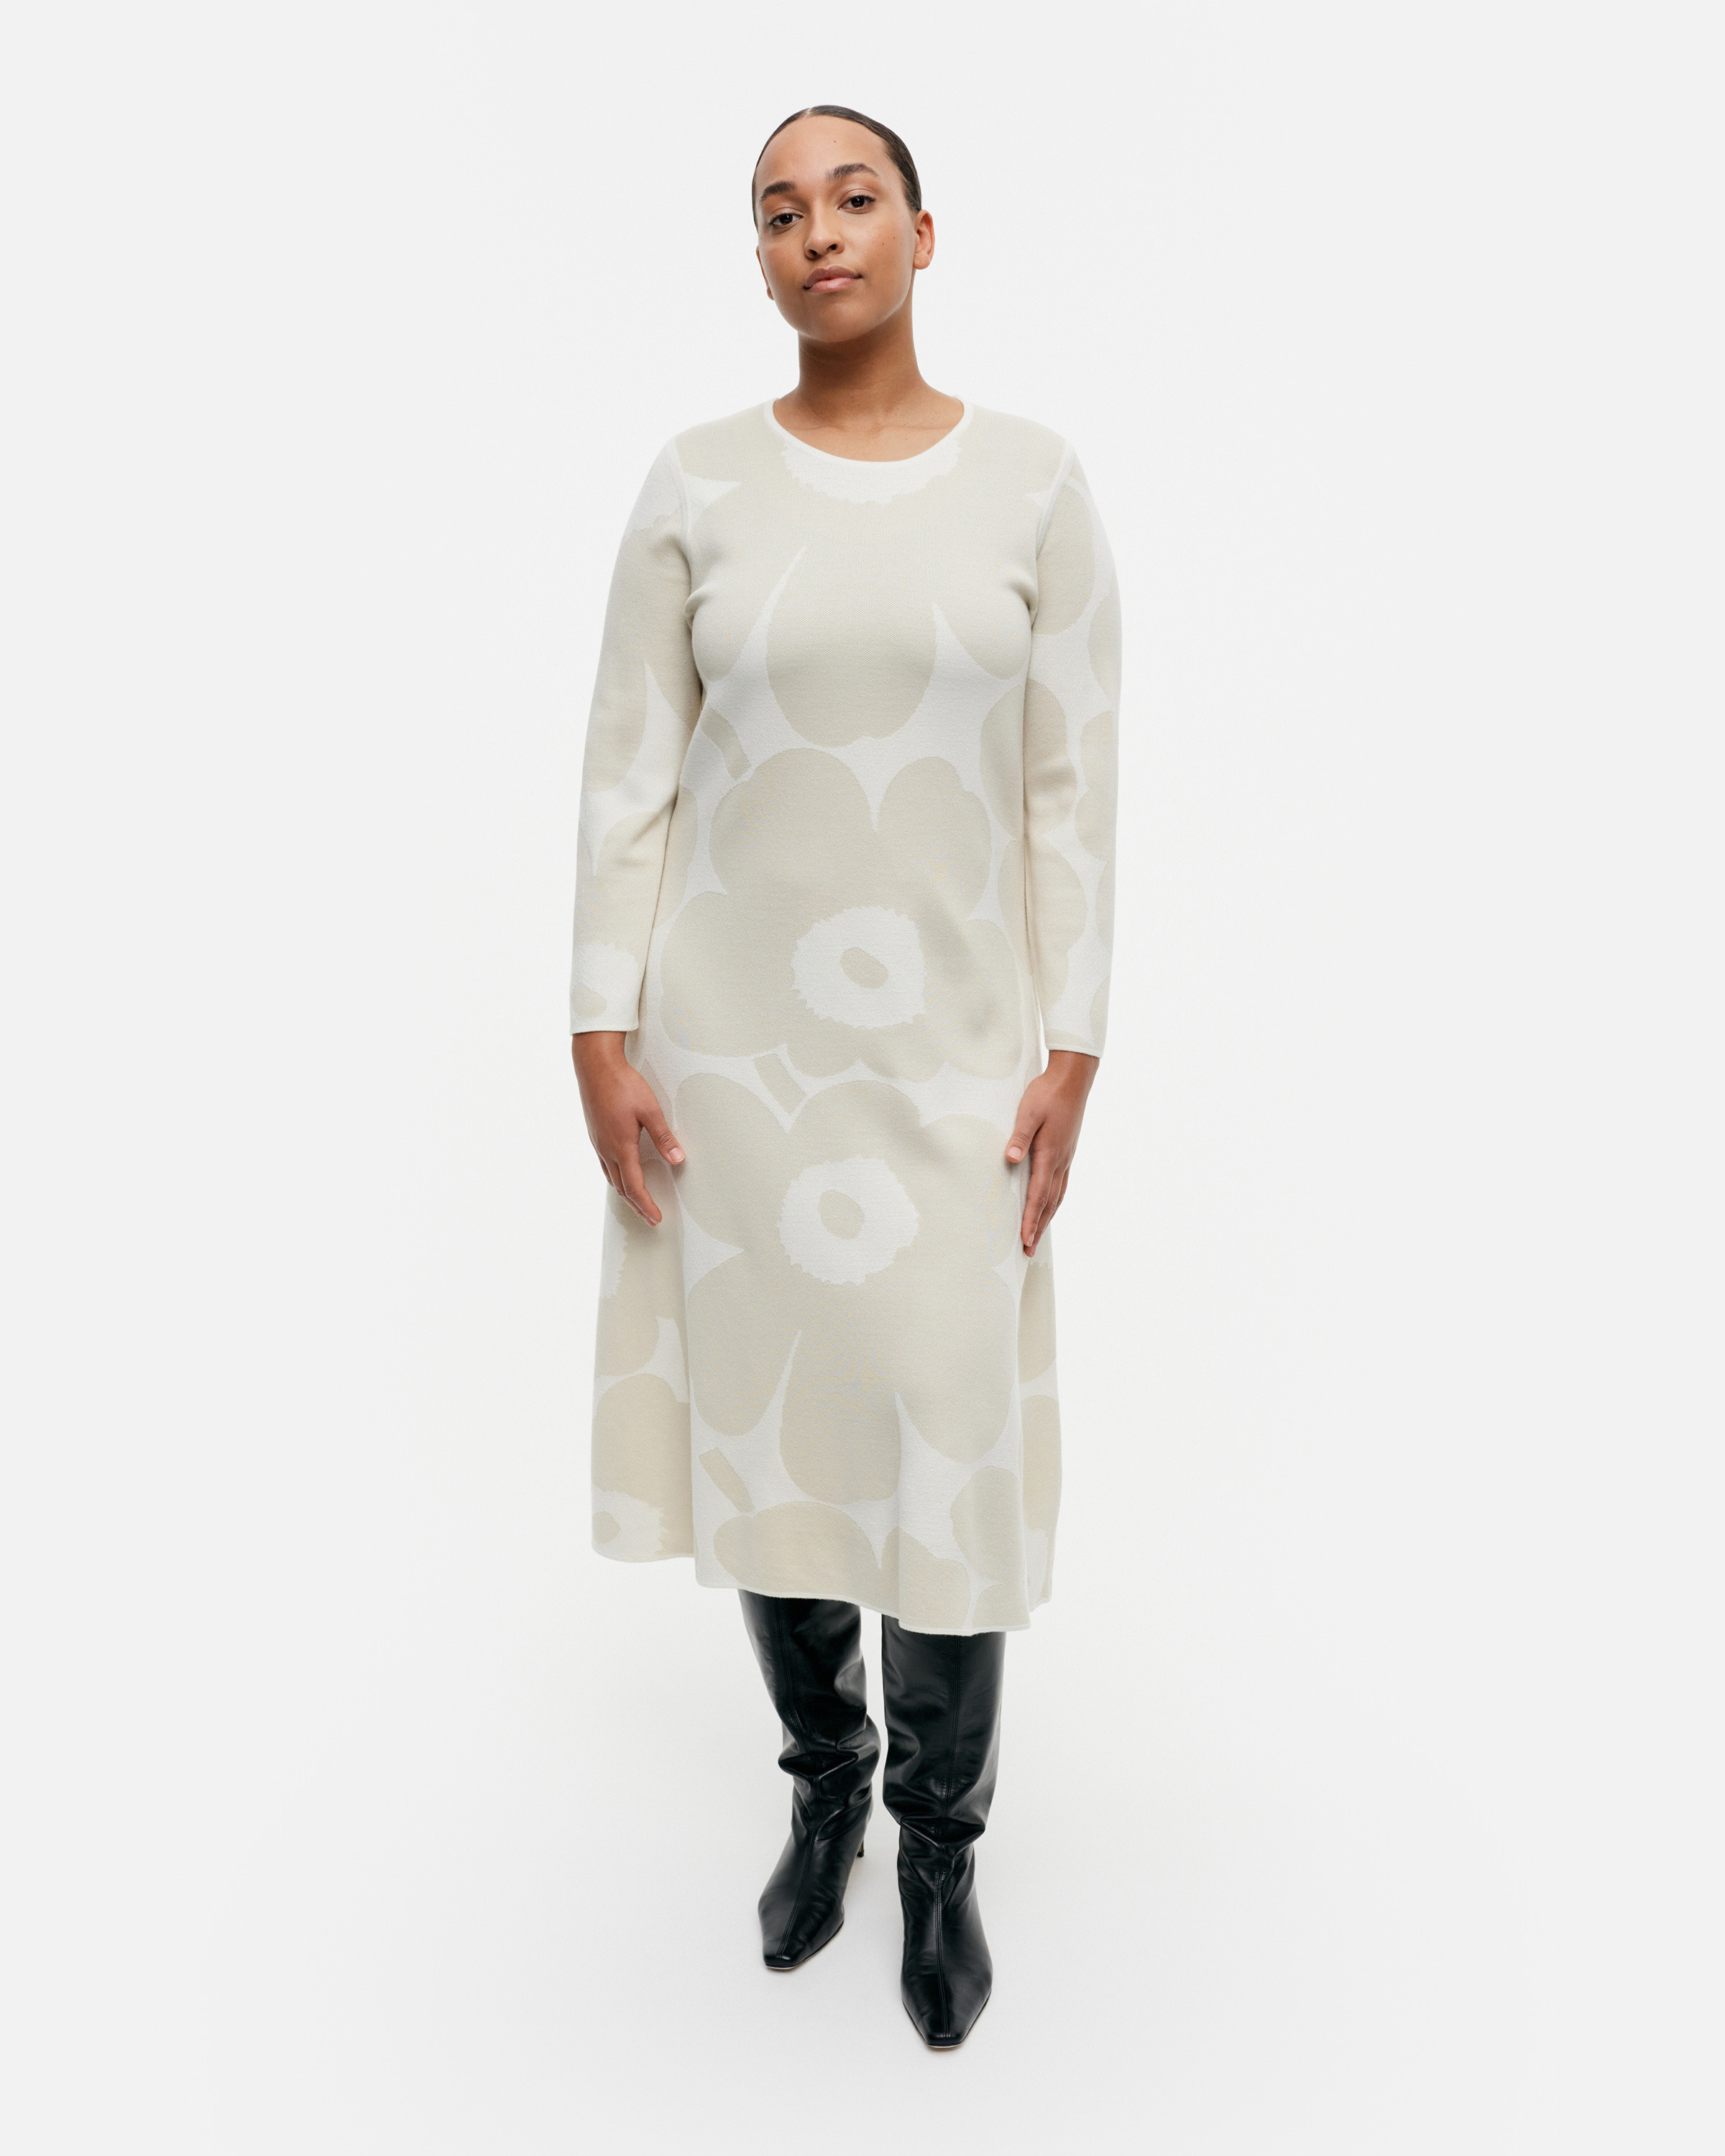 Marimekko Knit Collection Finnish Design